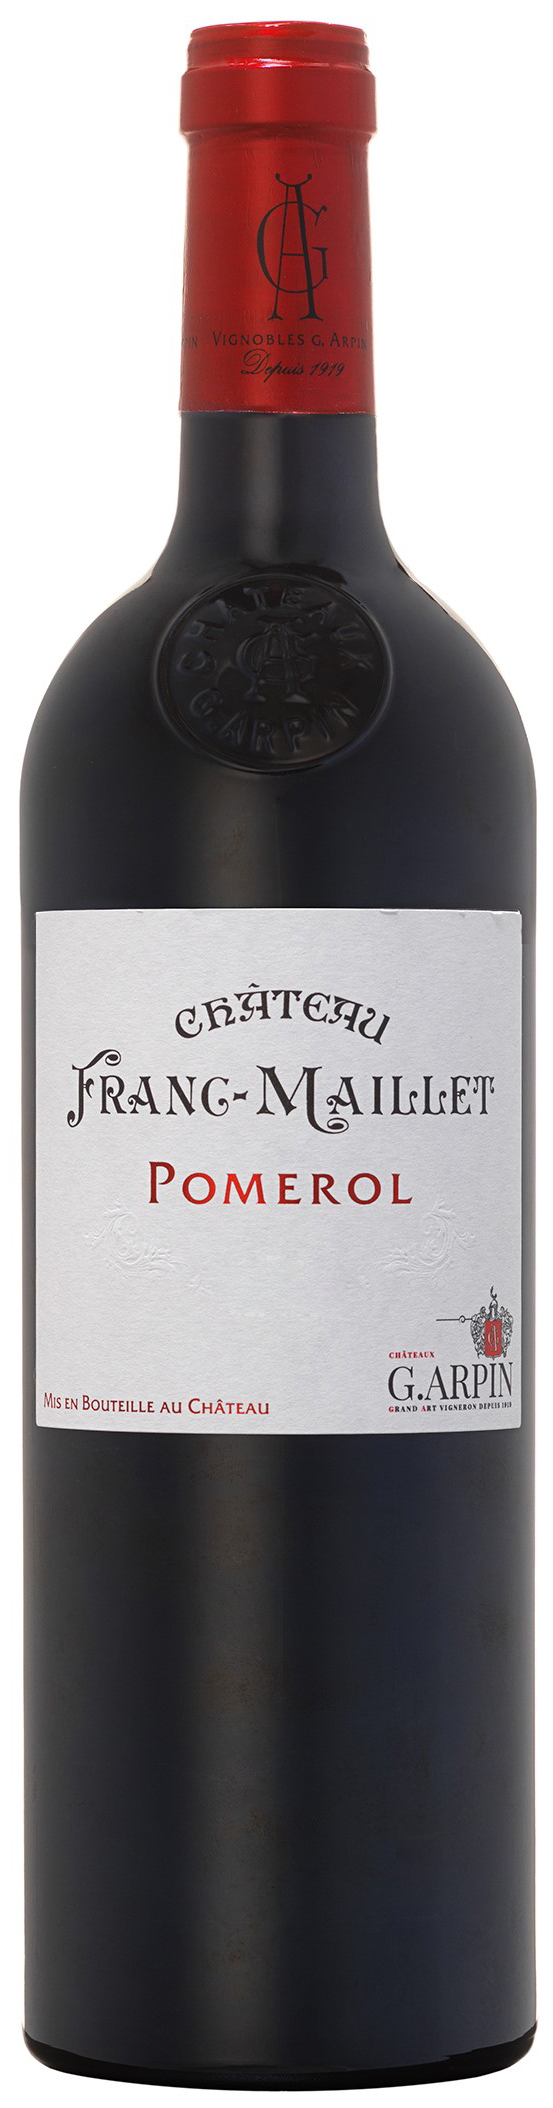 image of Château Franc-Maillet Pomerol 2016